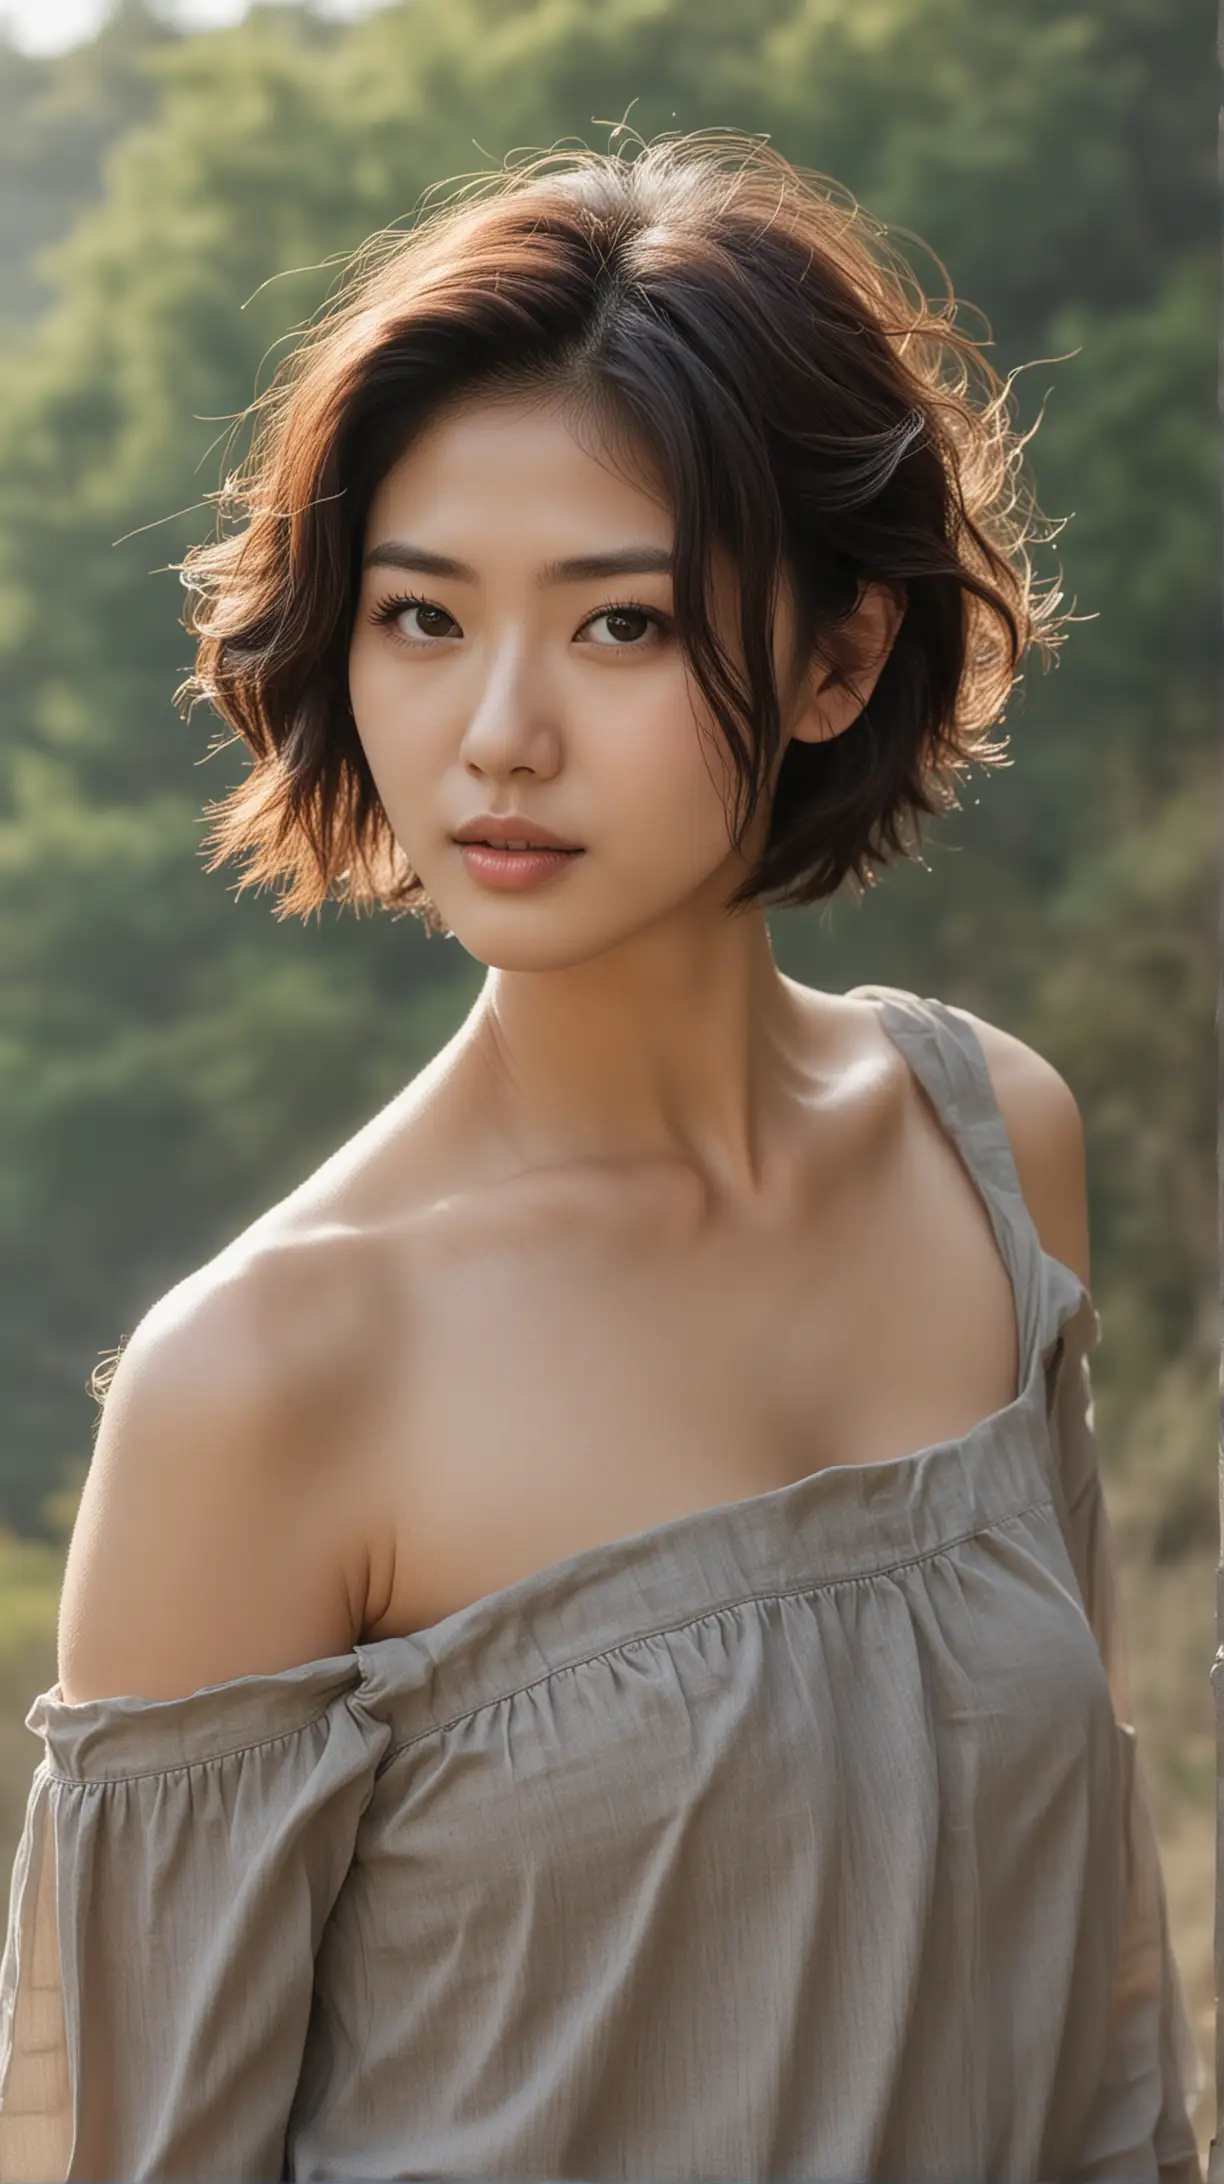 Beautiful female model, cut hair - wolf cut Short Wavy Korean, age 30, background - nature